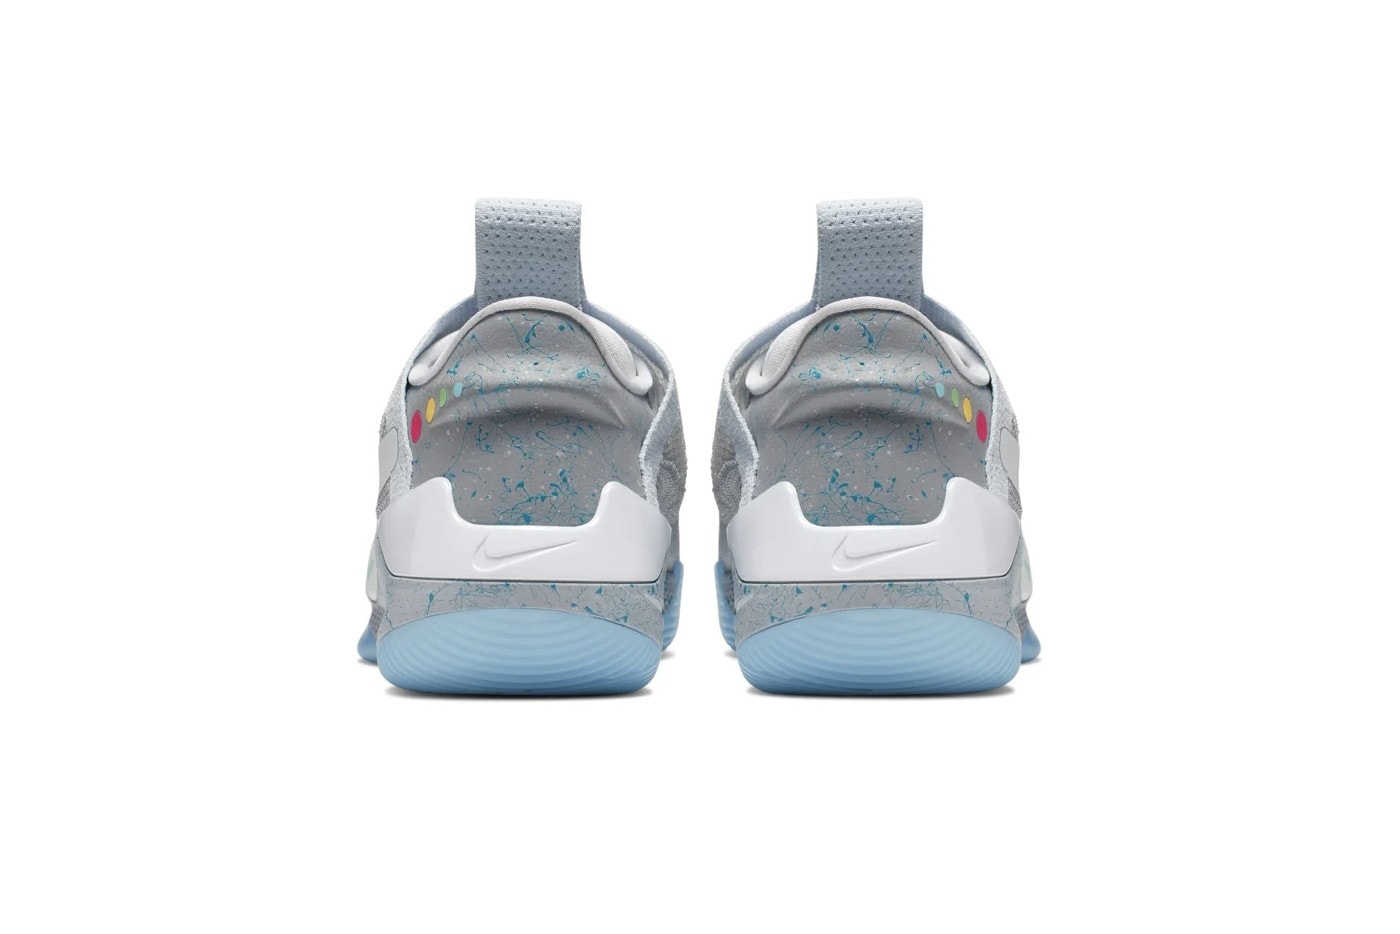 Nike Adapt BB 自動繫帶籃球鞋款即將迎來補貨動作